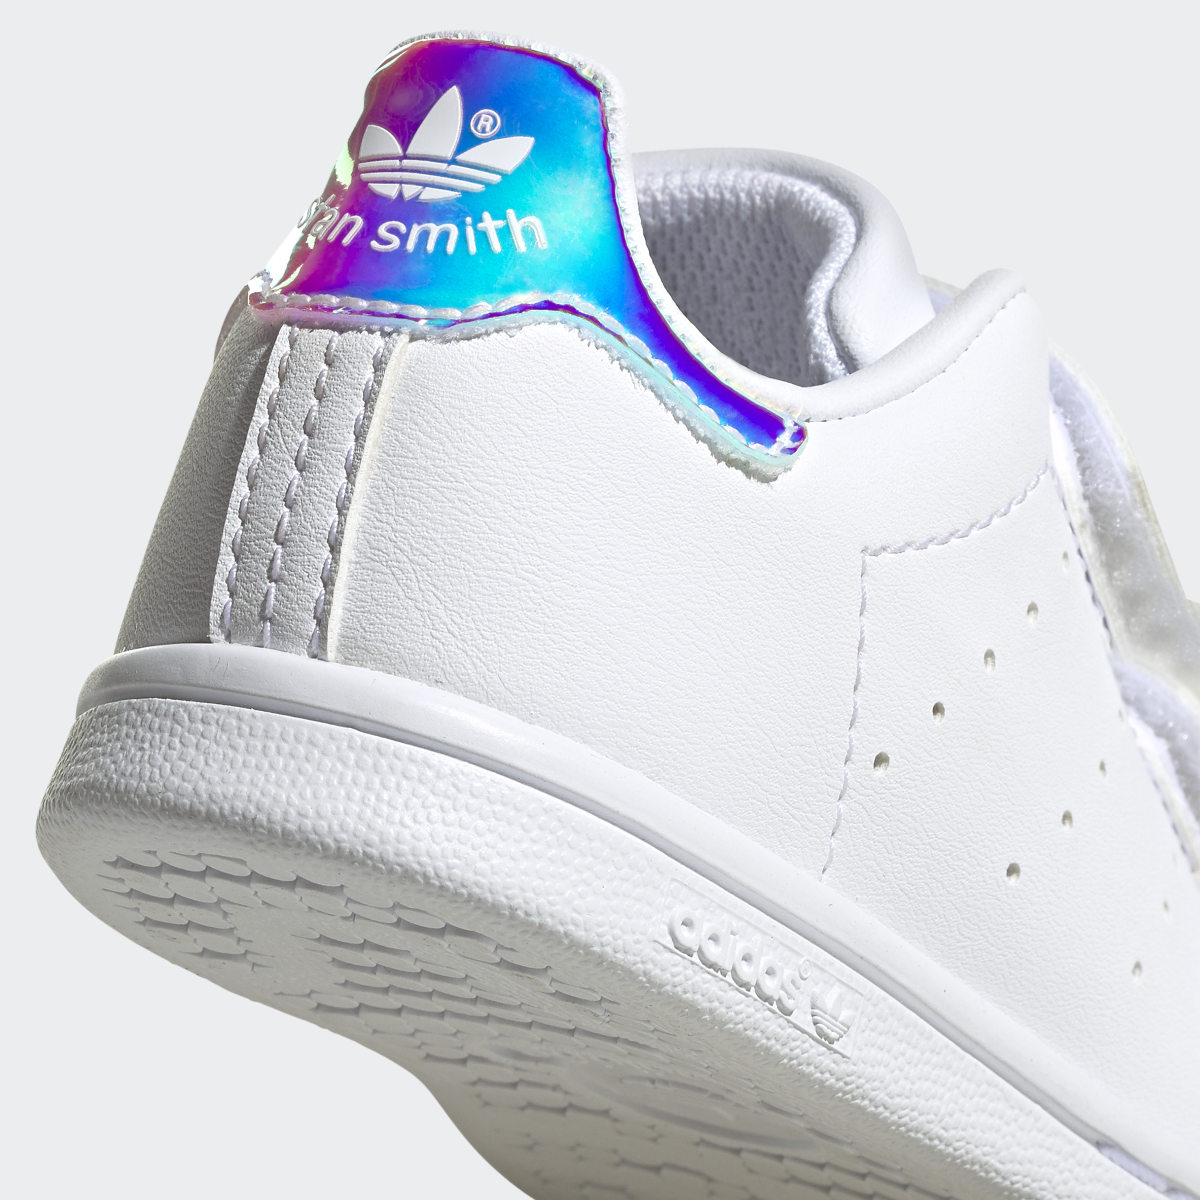 Adidas Stan Smith Ayakkabı. 9